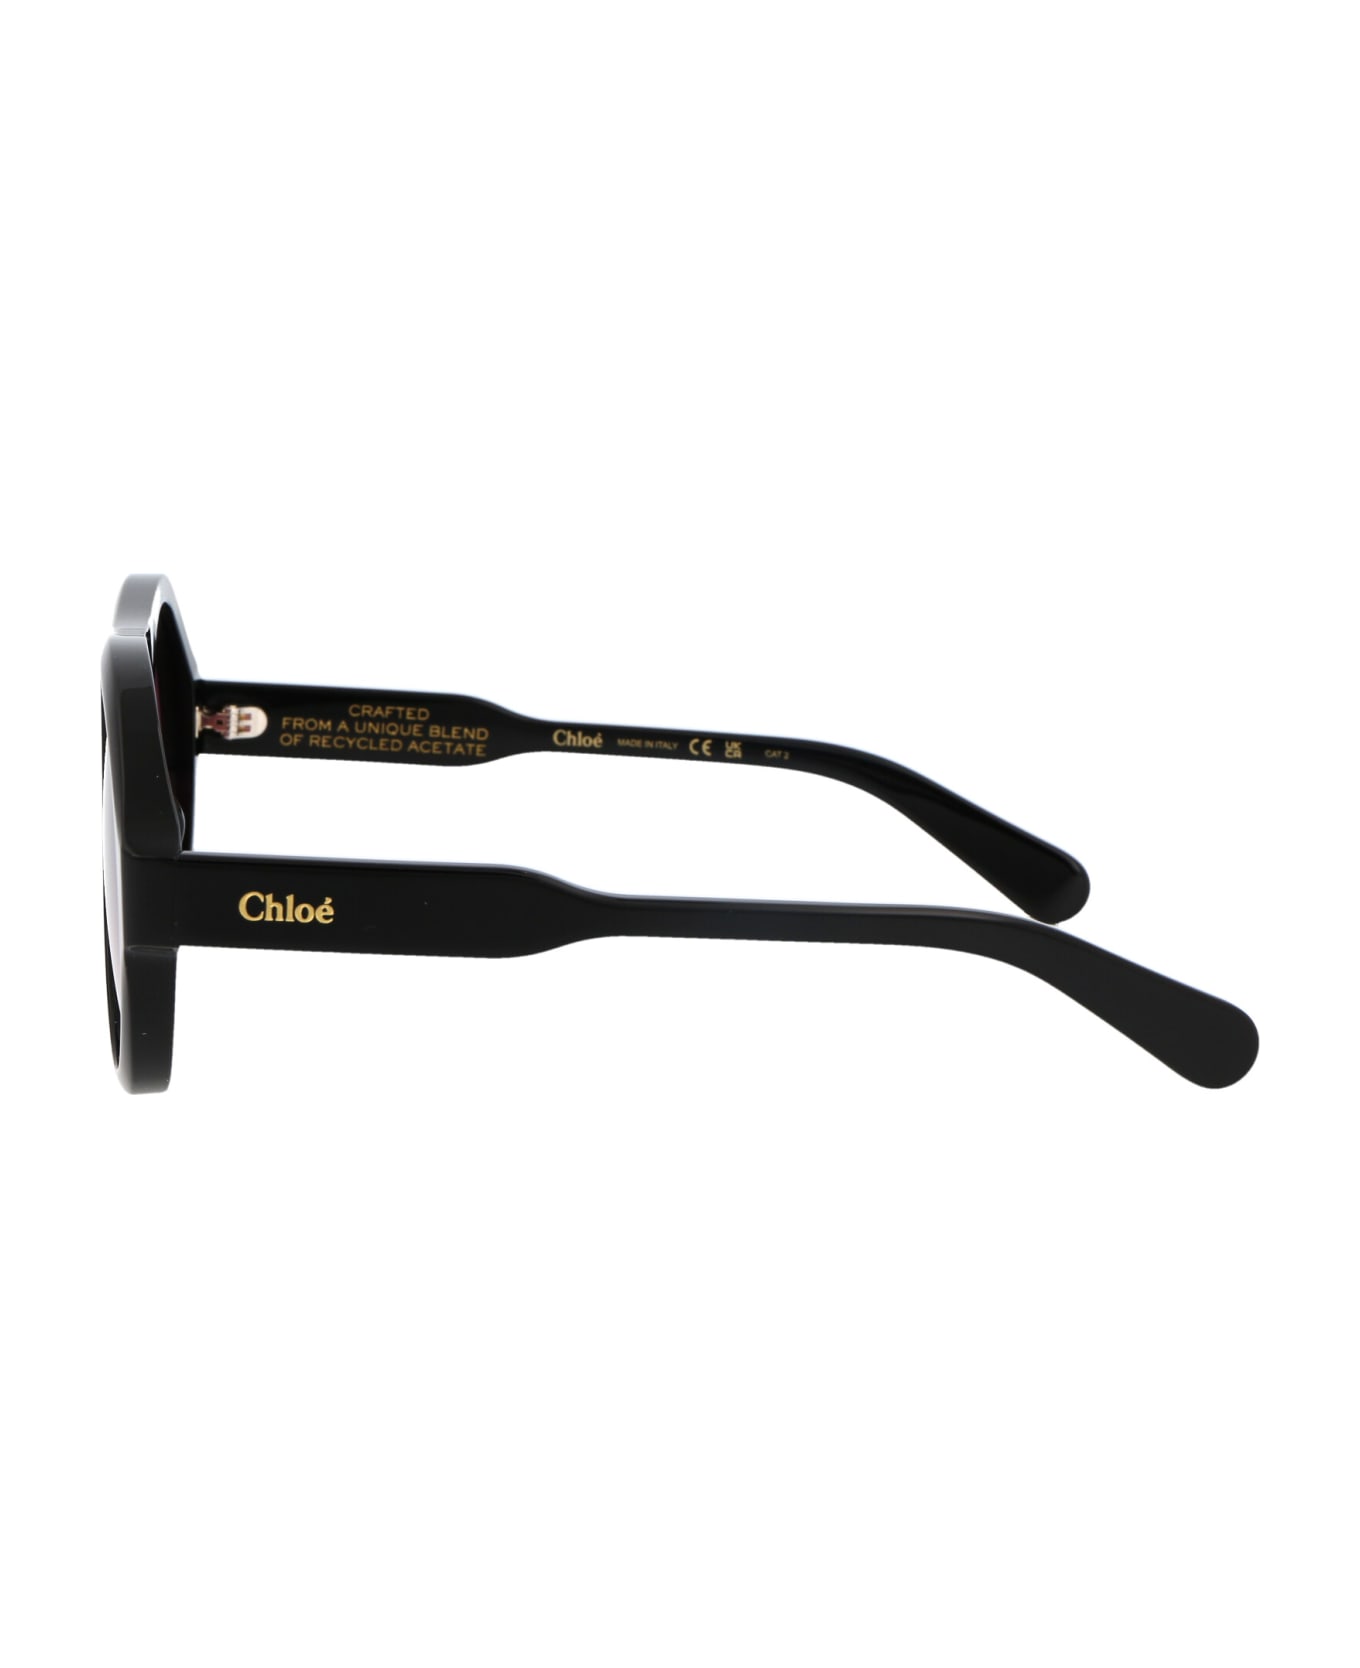 Chloé Eyewear Ch0151s Sunglasses - 001 BLACK BLACK RED サングラス